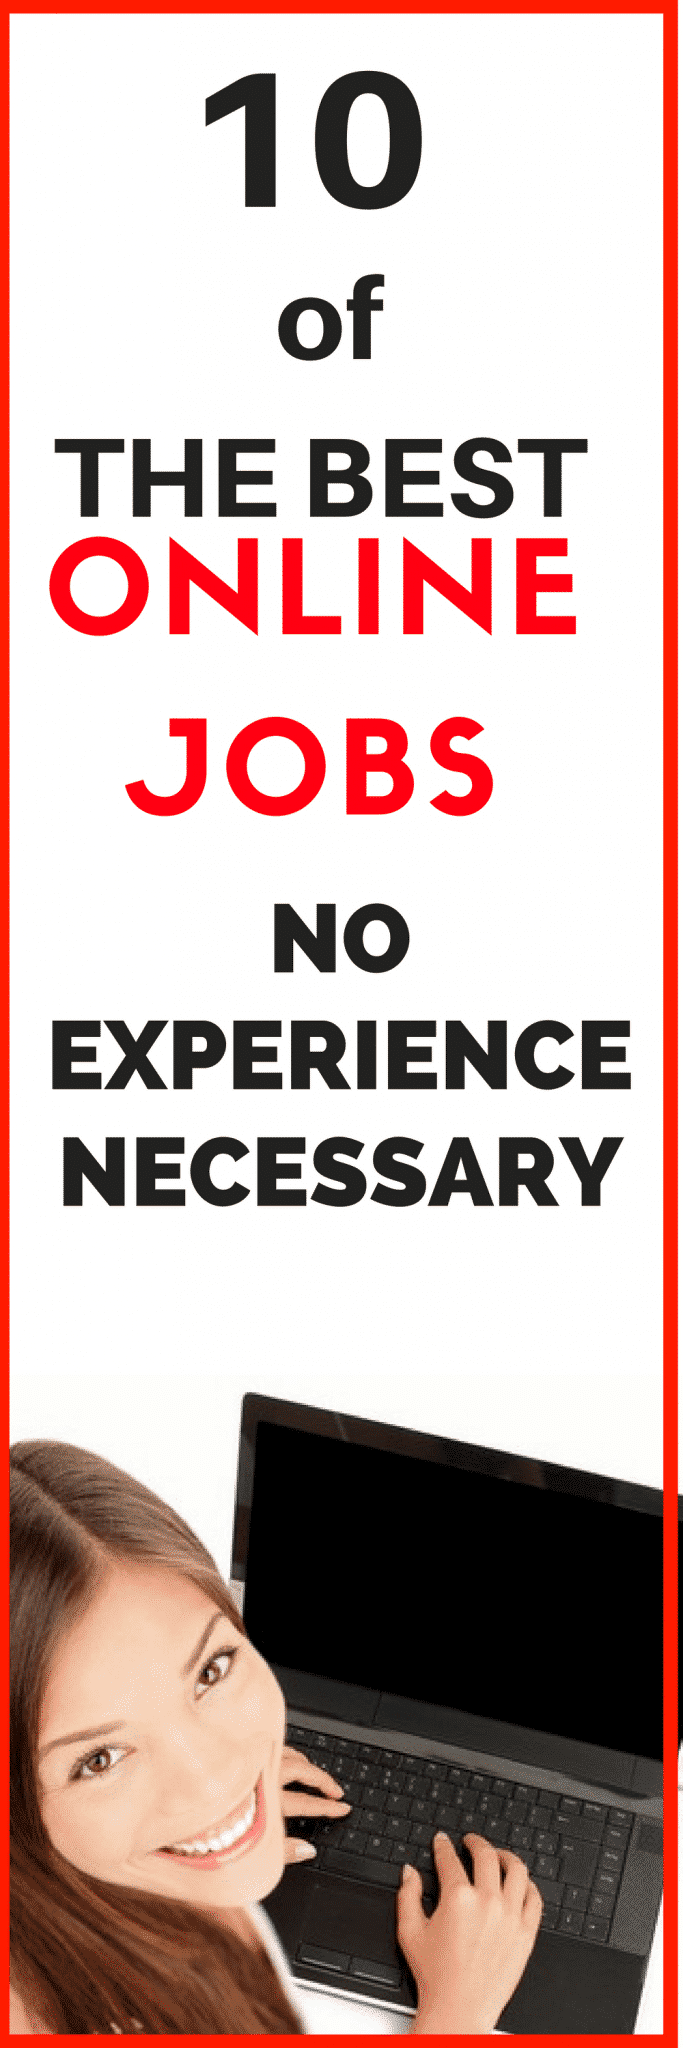 Retail jobs no experience needed sydney